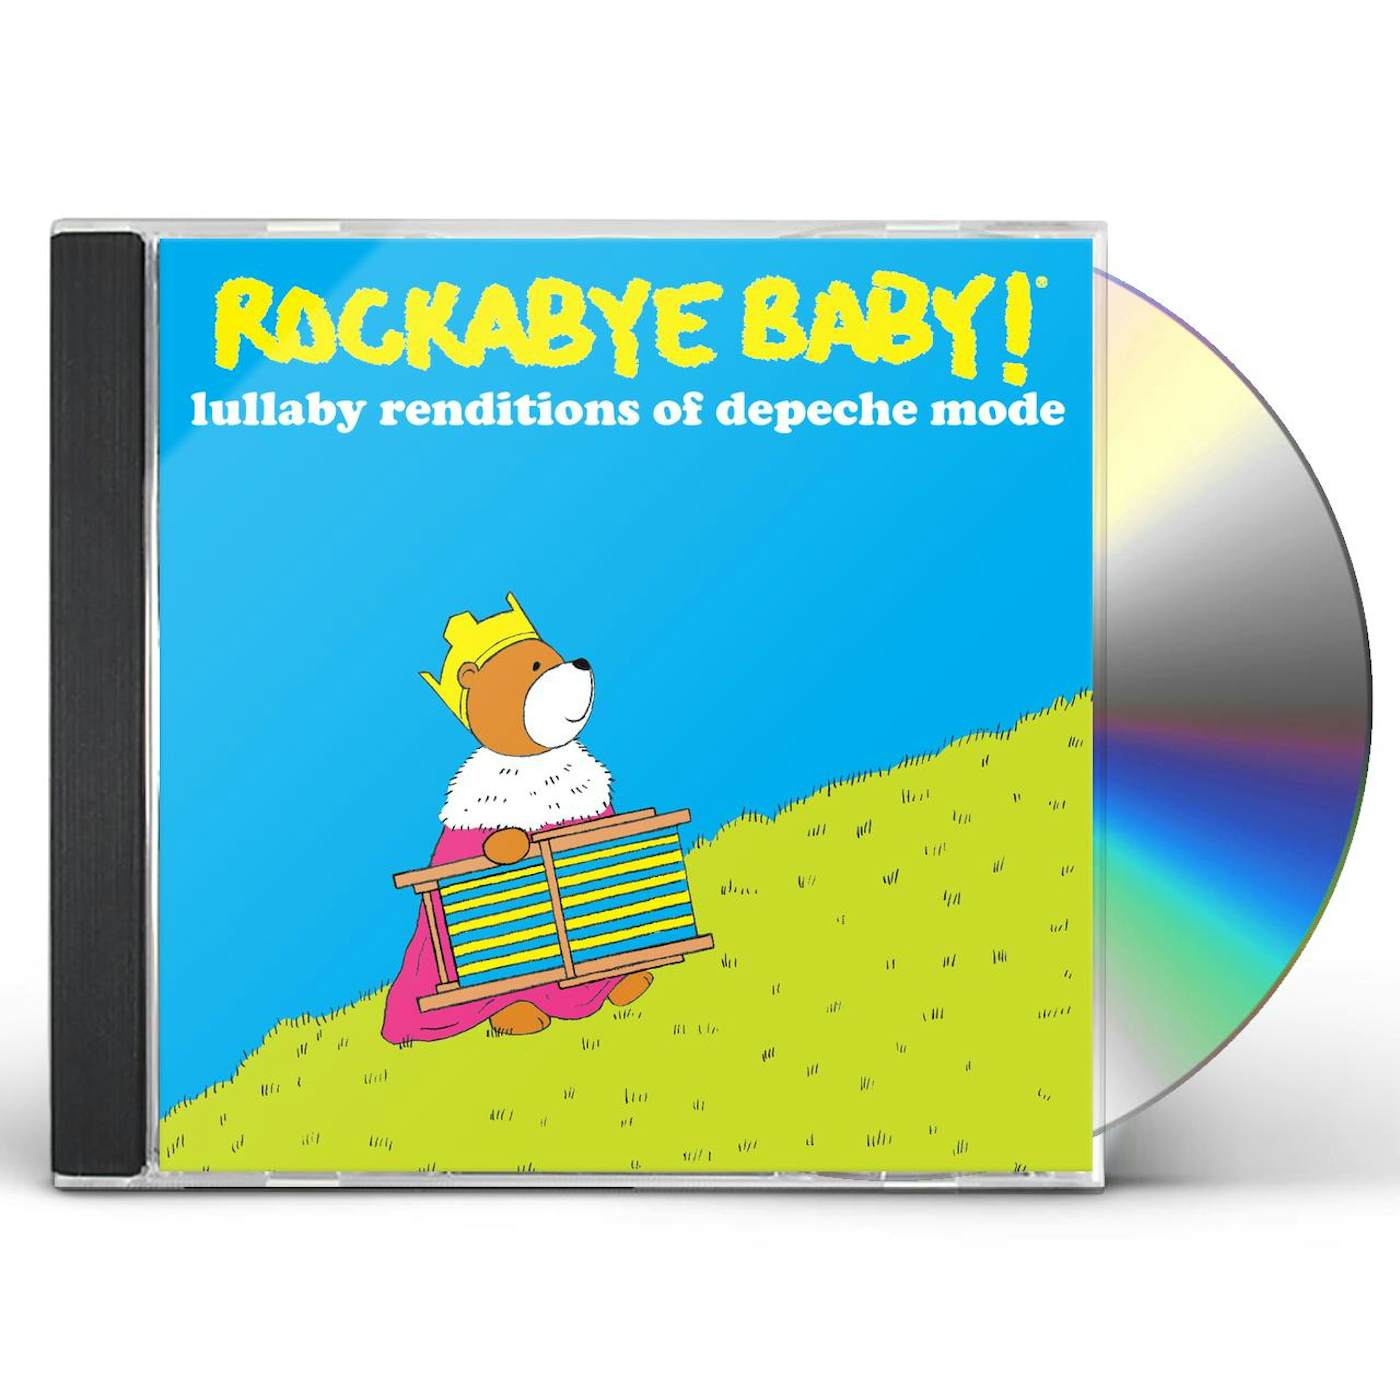 Rockabye Baby! LULLABY RENDITIONS OF DEPECHE MODE CD